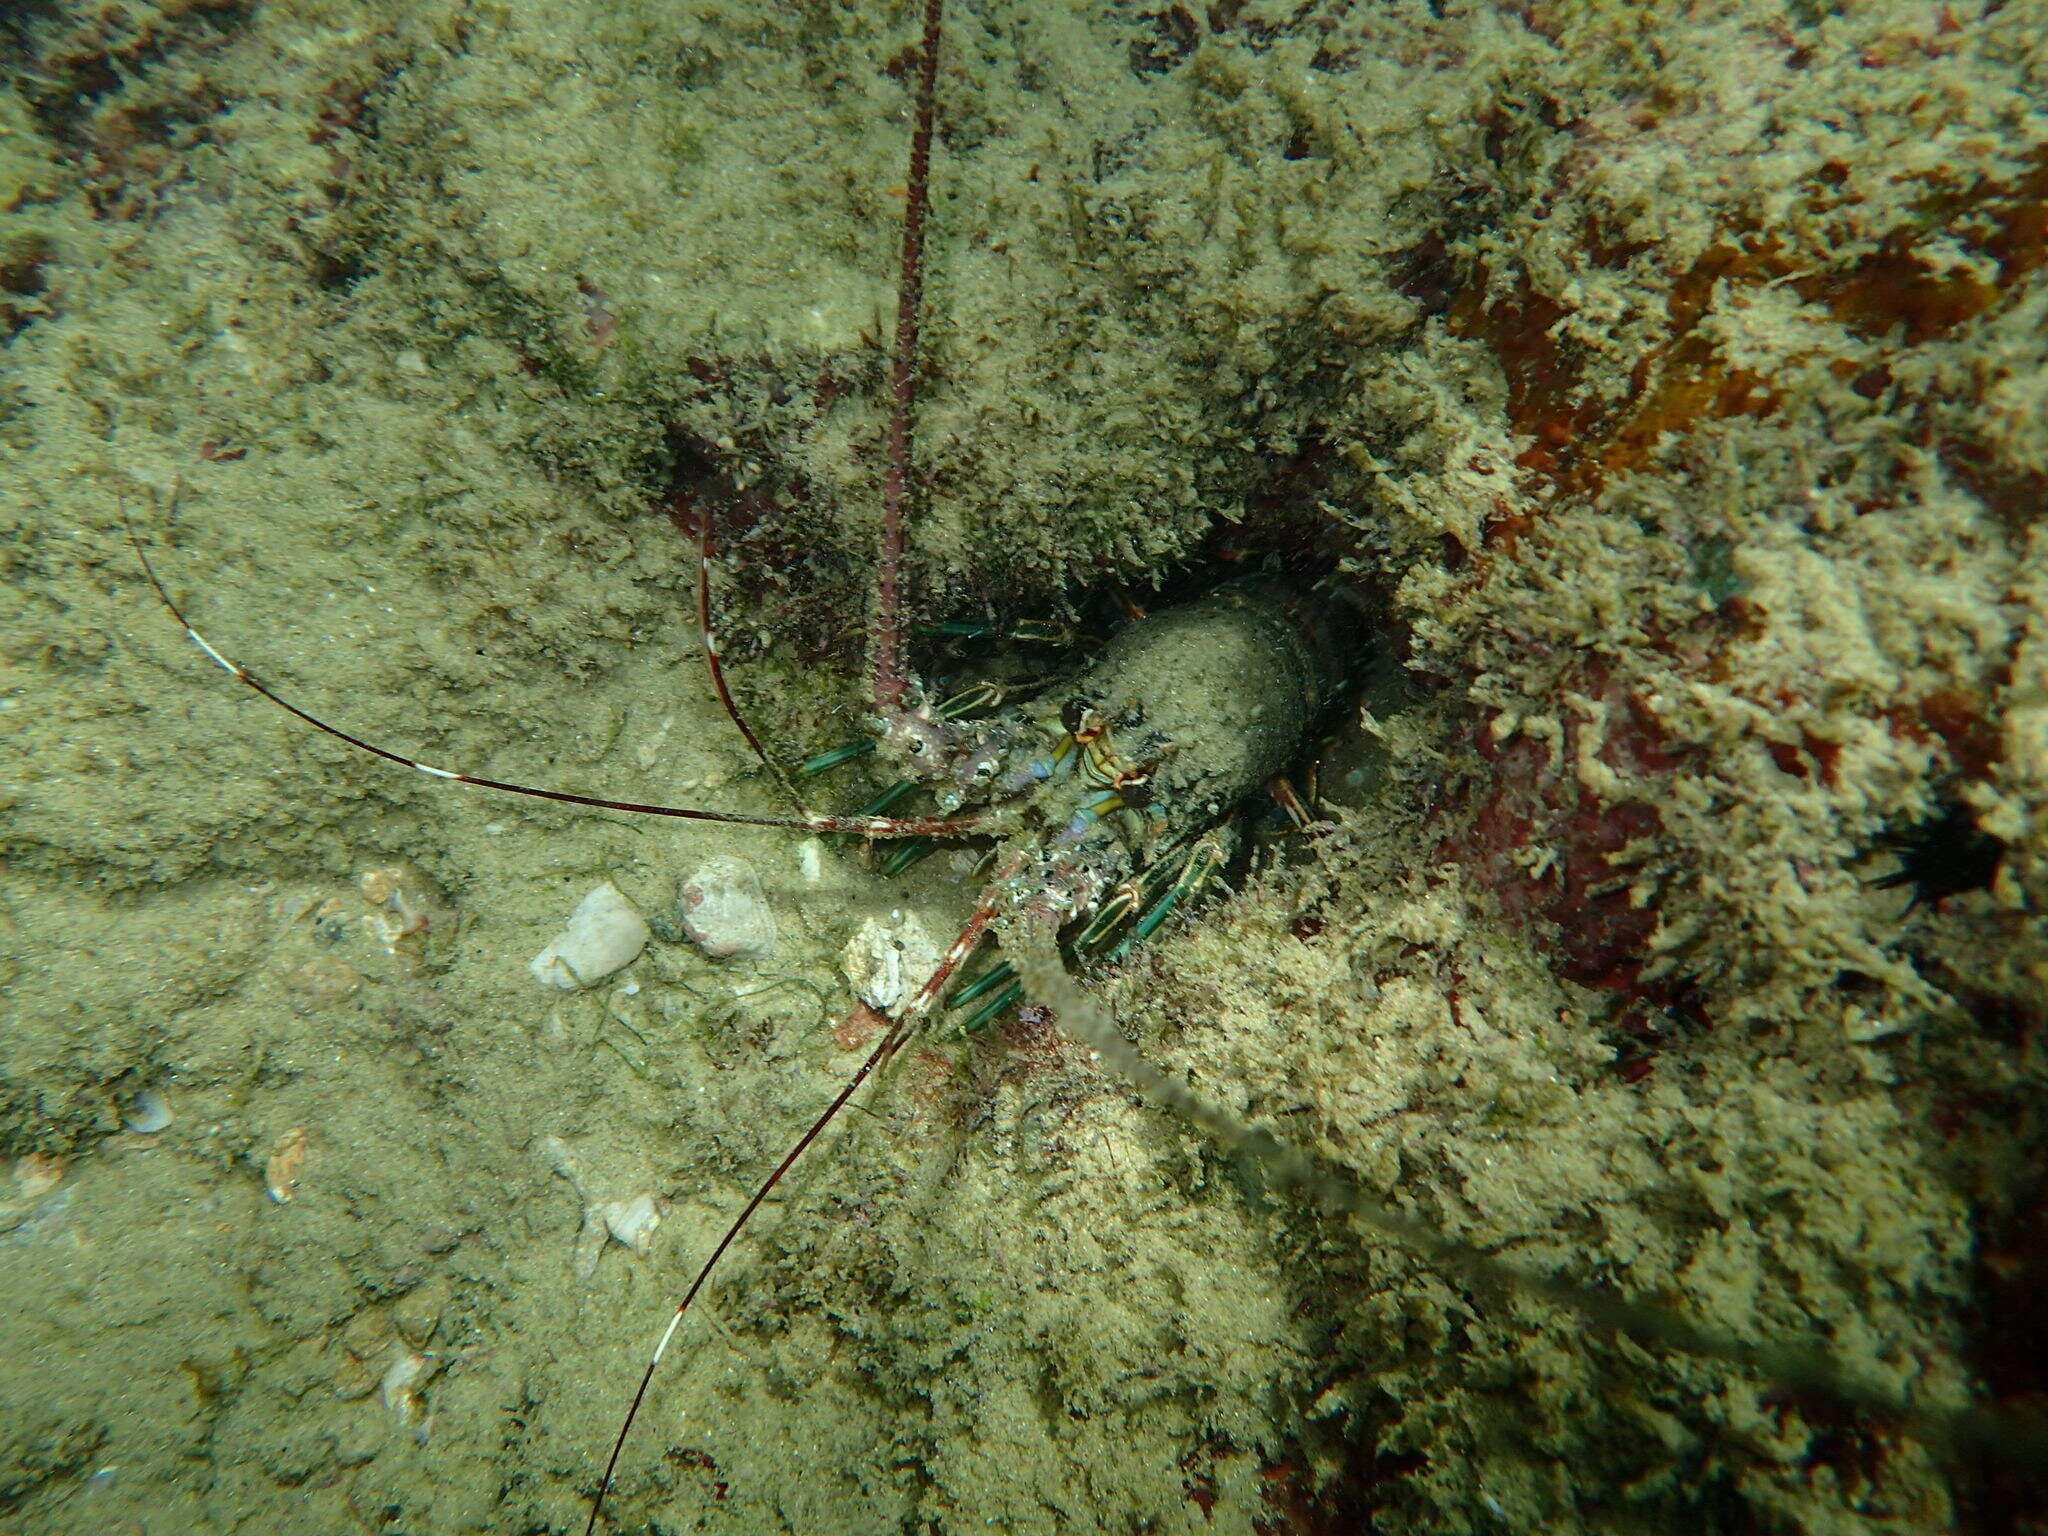 Image of Brazilian lobster